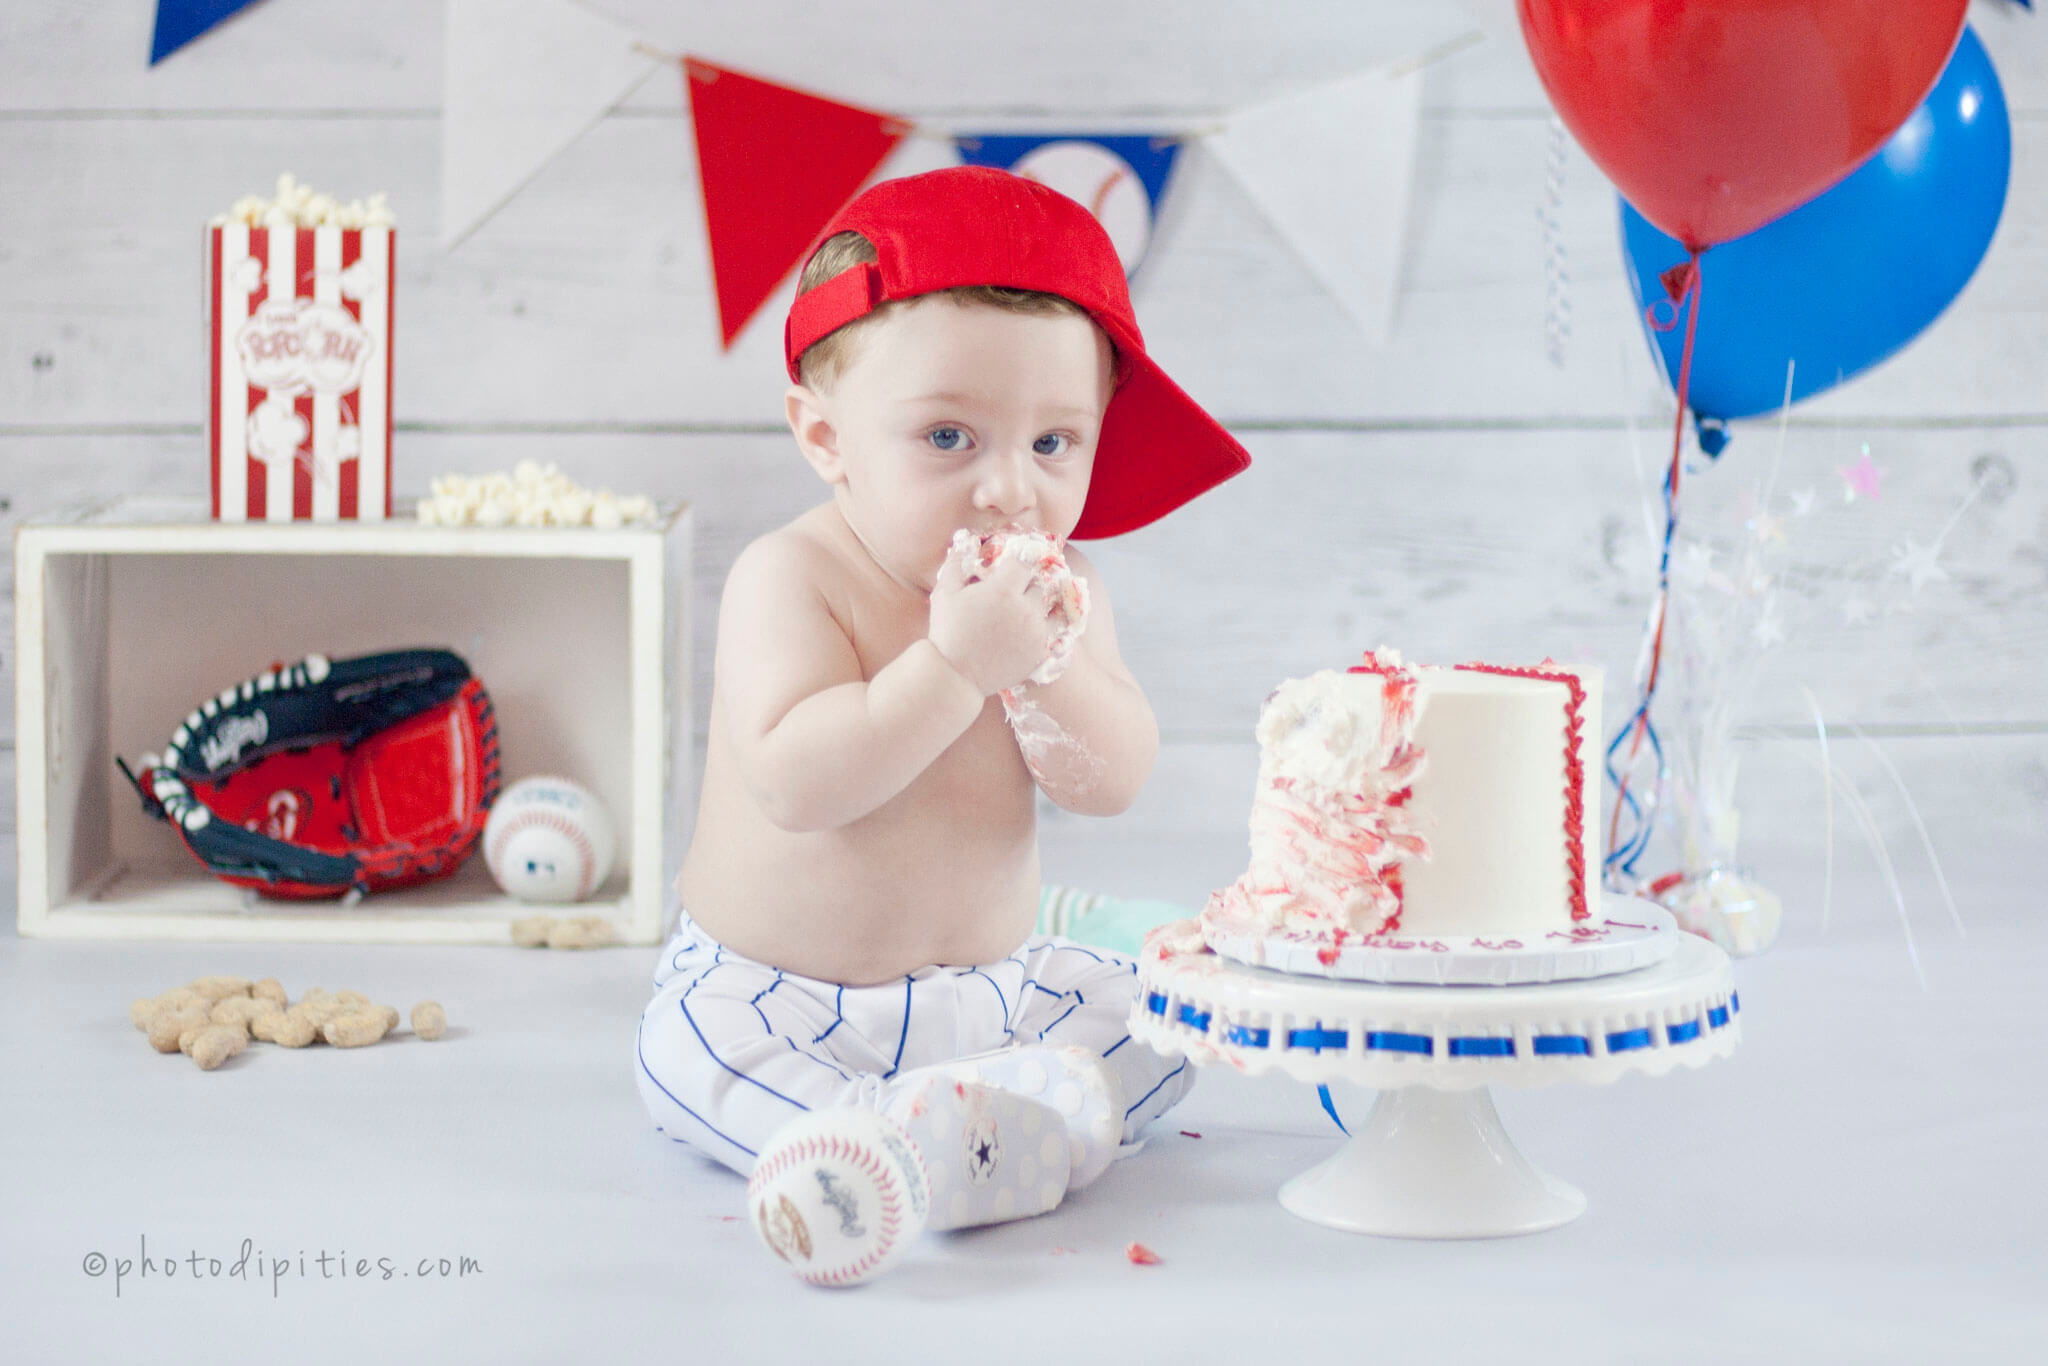 Photodipities Family | Baby Photography - Half Birthday Cake Smash